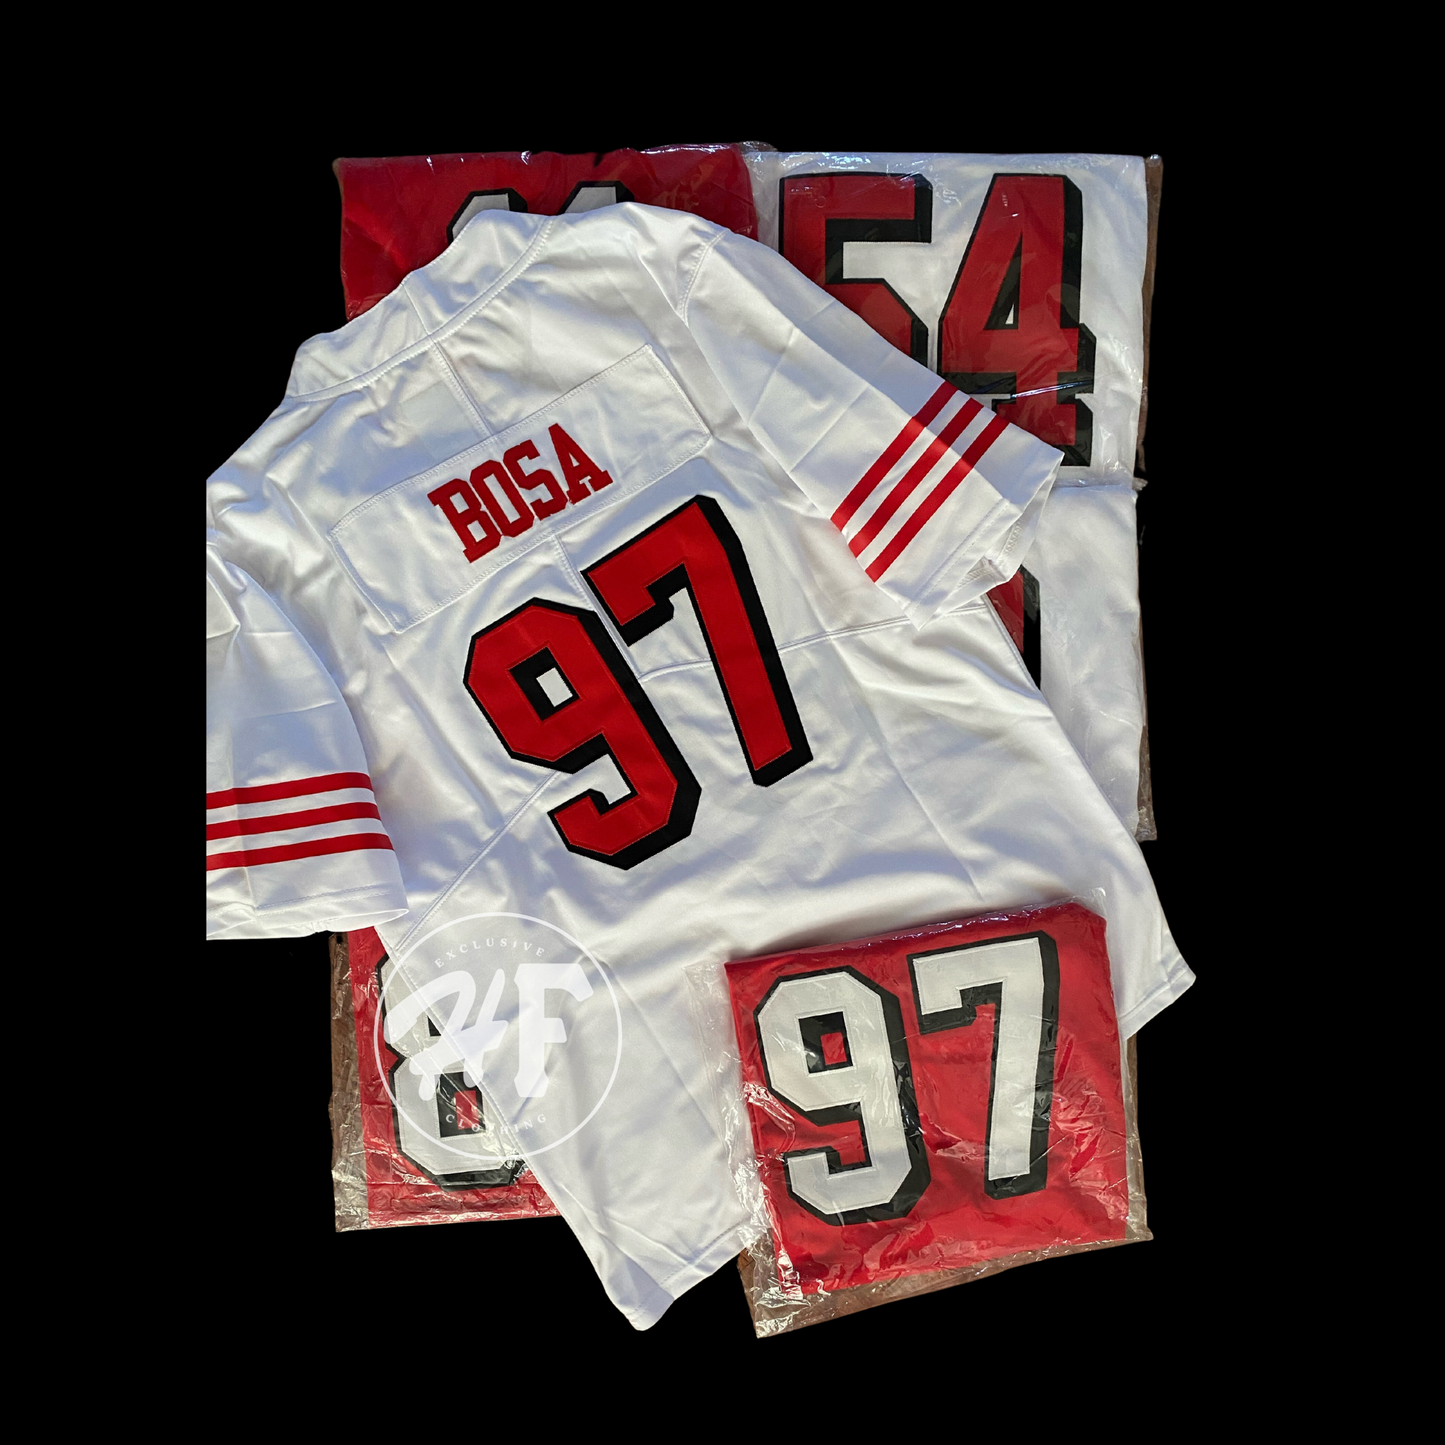 #97 Bosa Stitched Men’s 49ers jersey